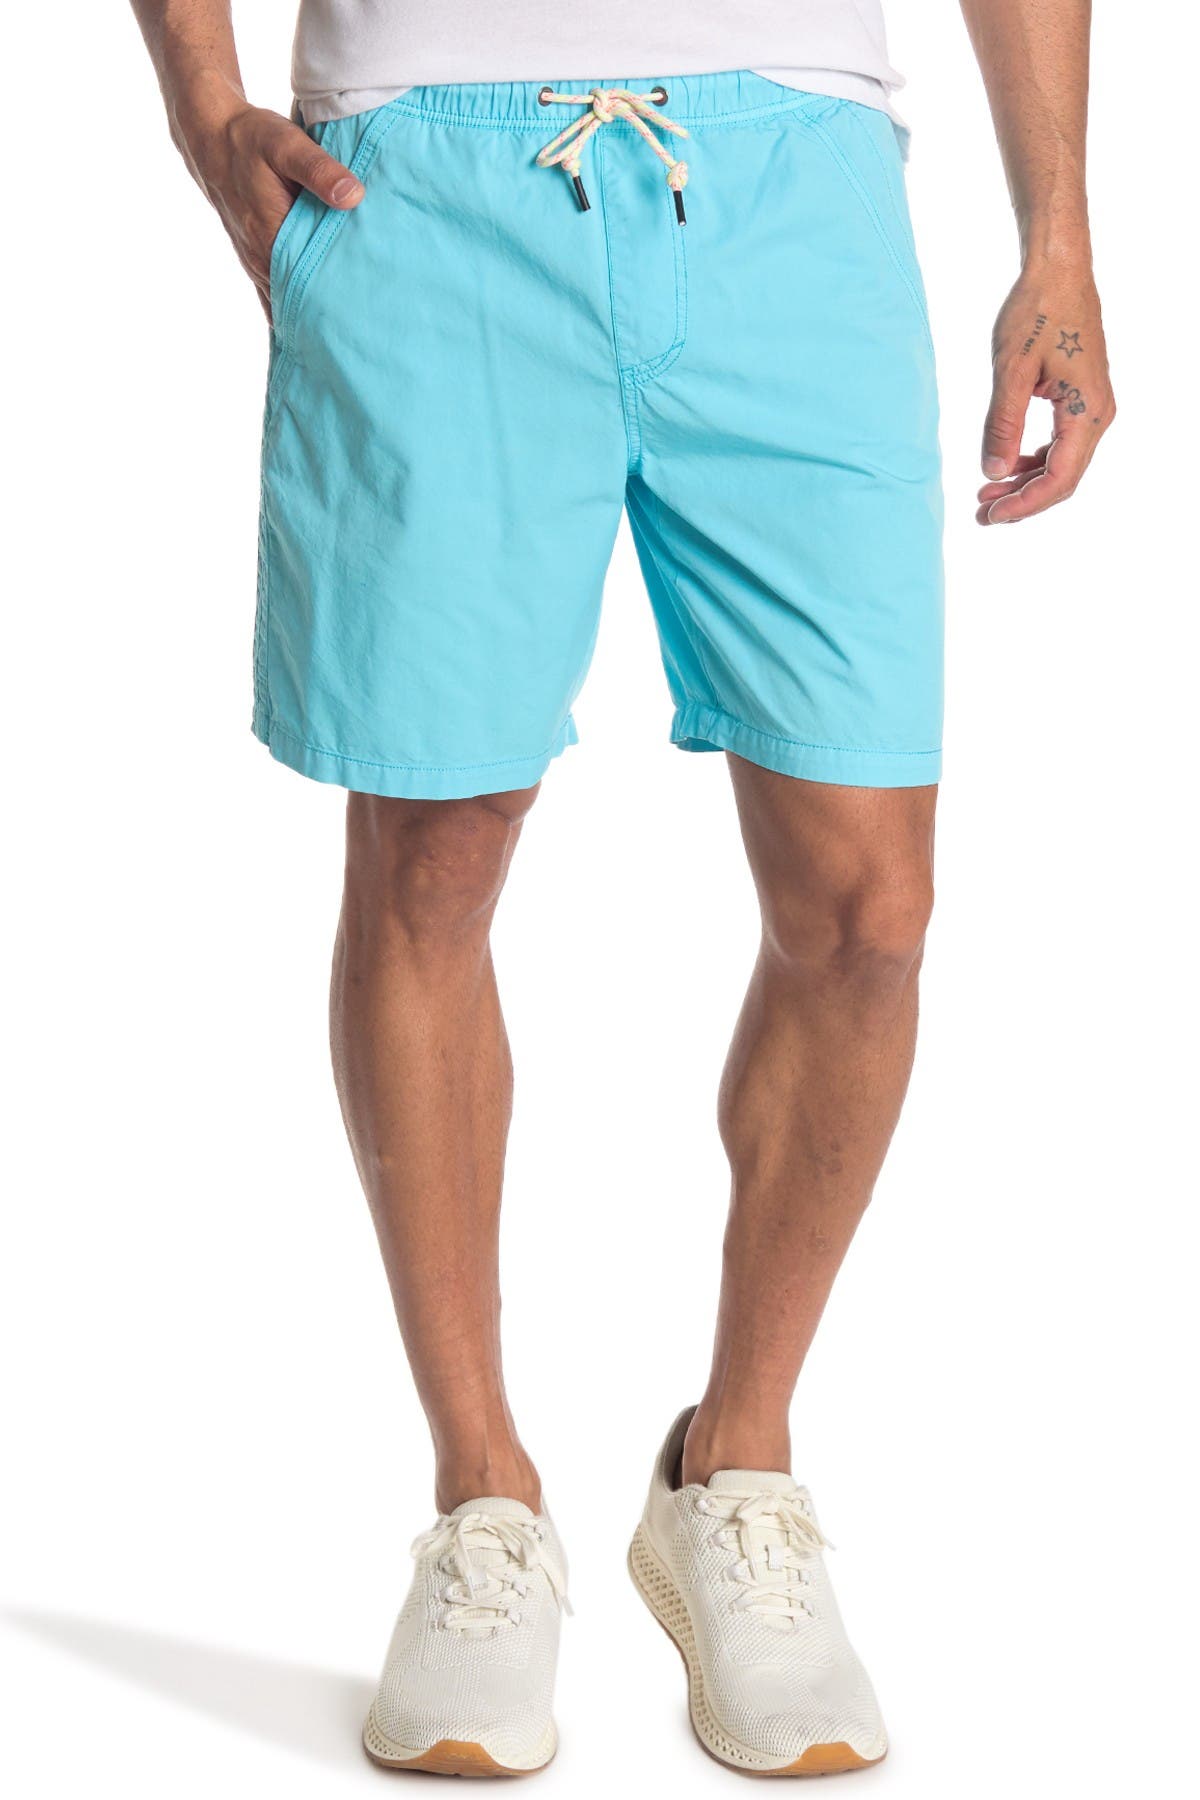 Union Denim Sun-sational Pull-on Woven Shorts In Light/pastel Blue9